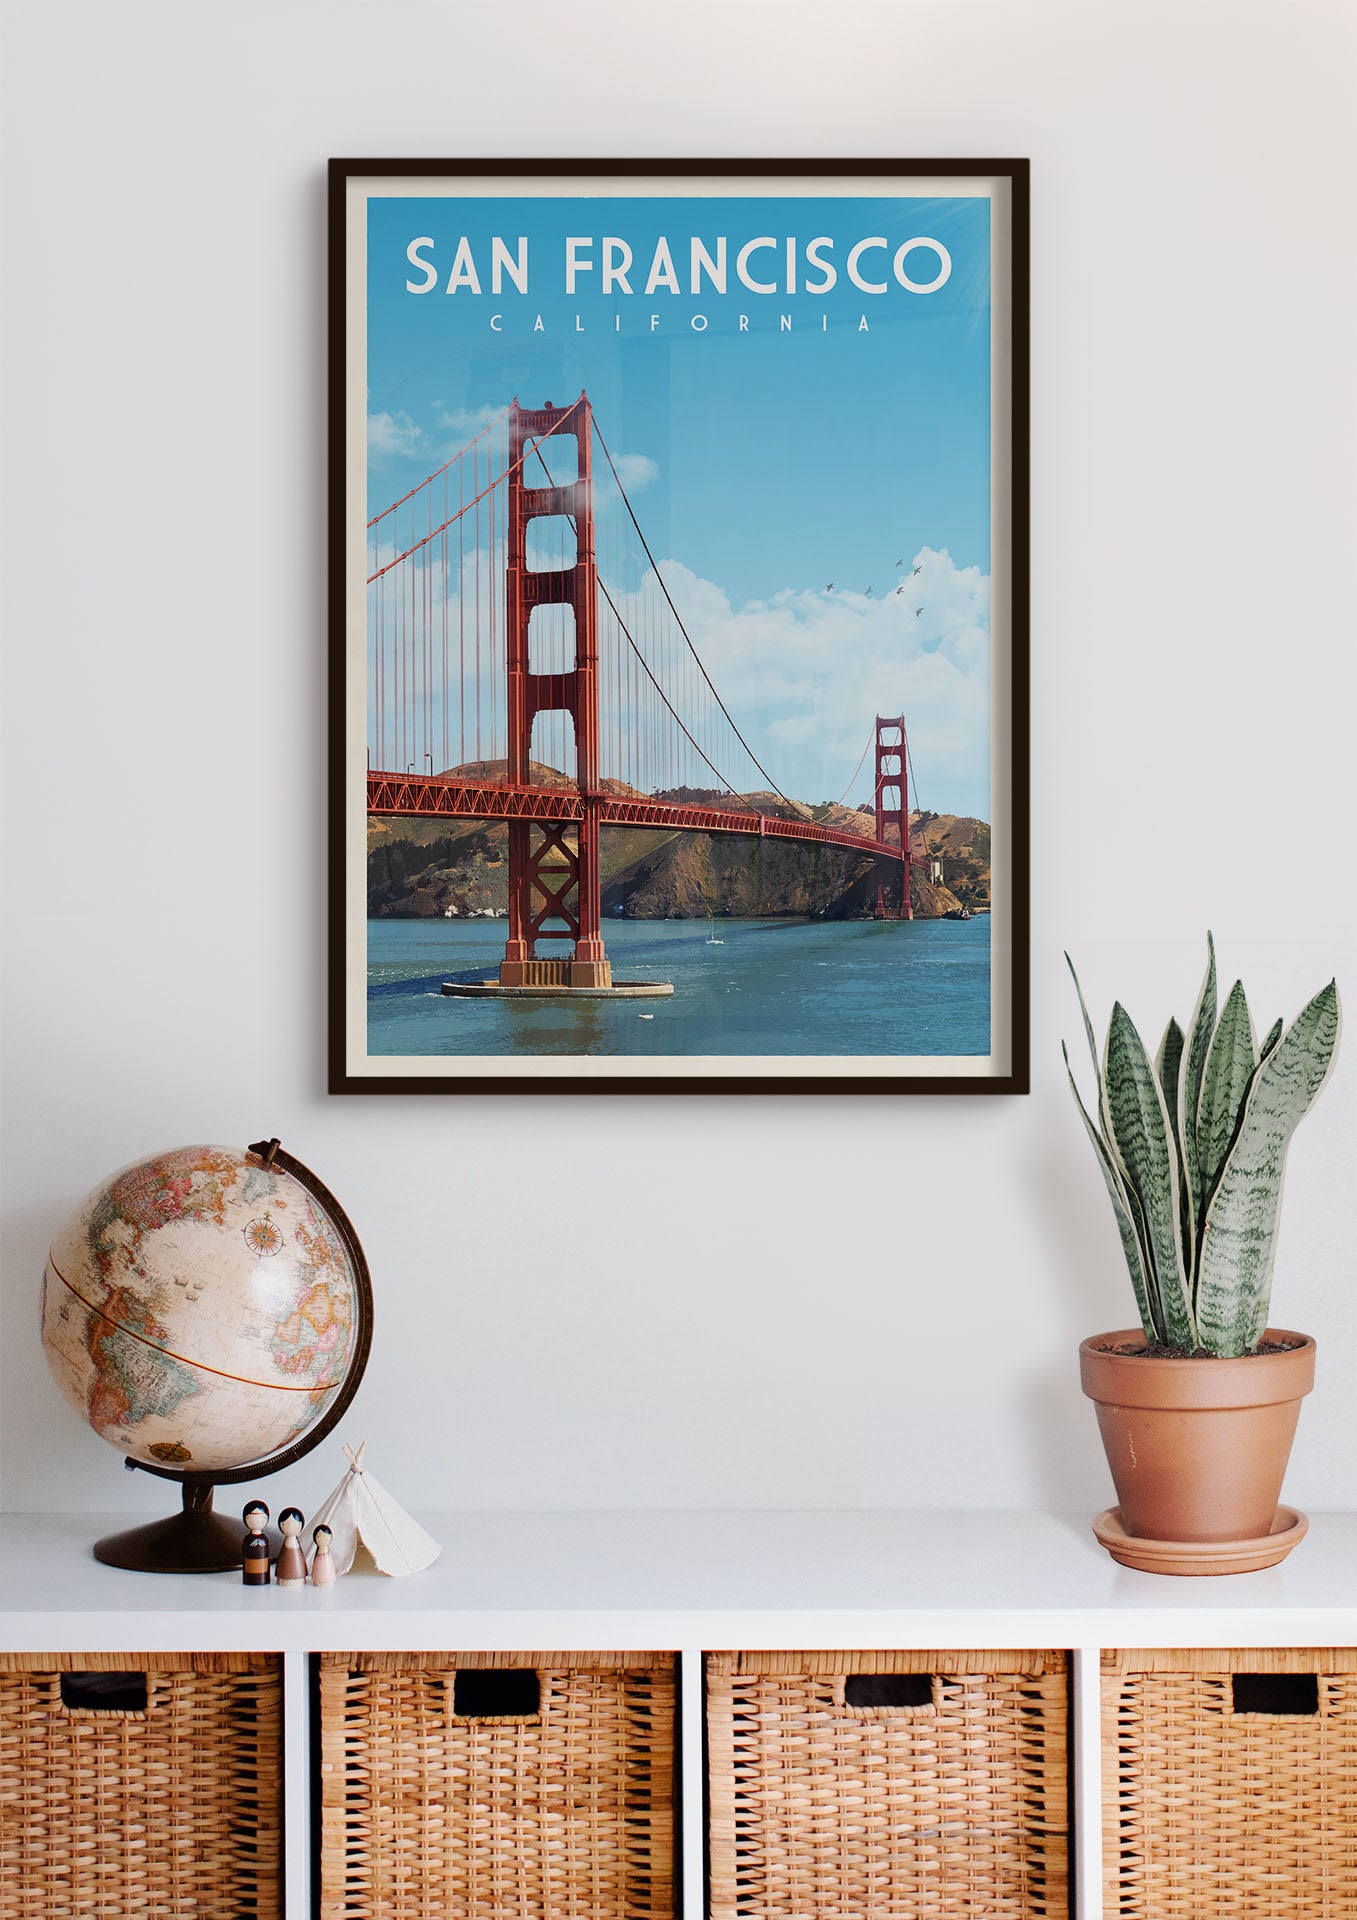 San Francisco, California - Vintage Travel Poster